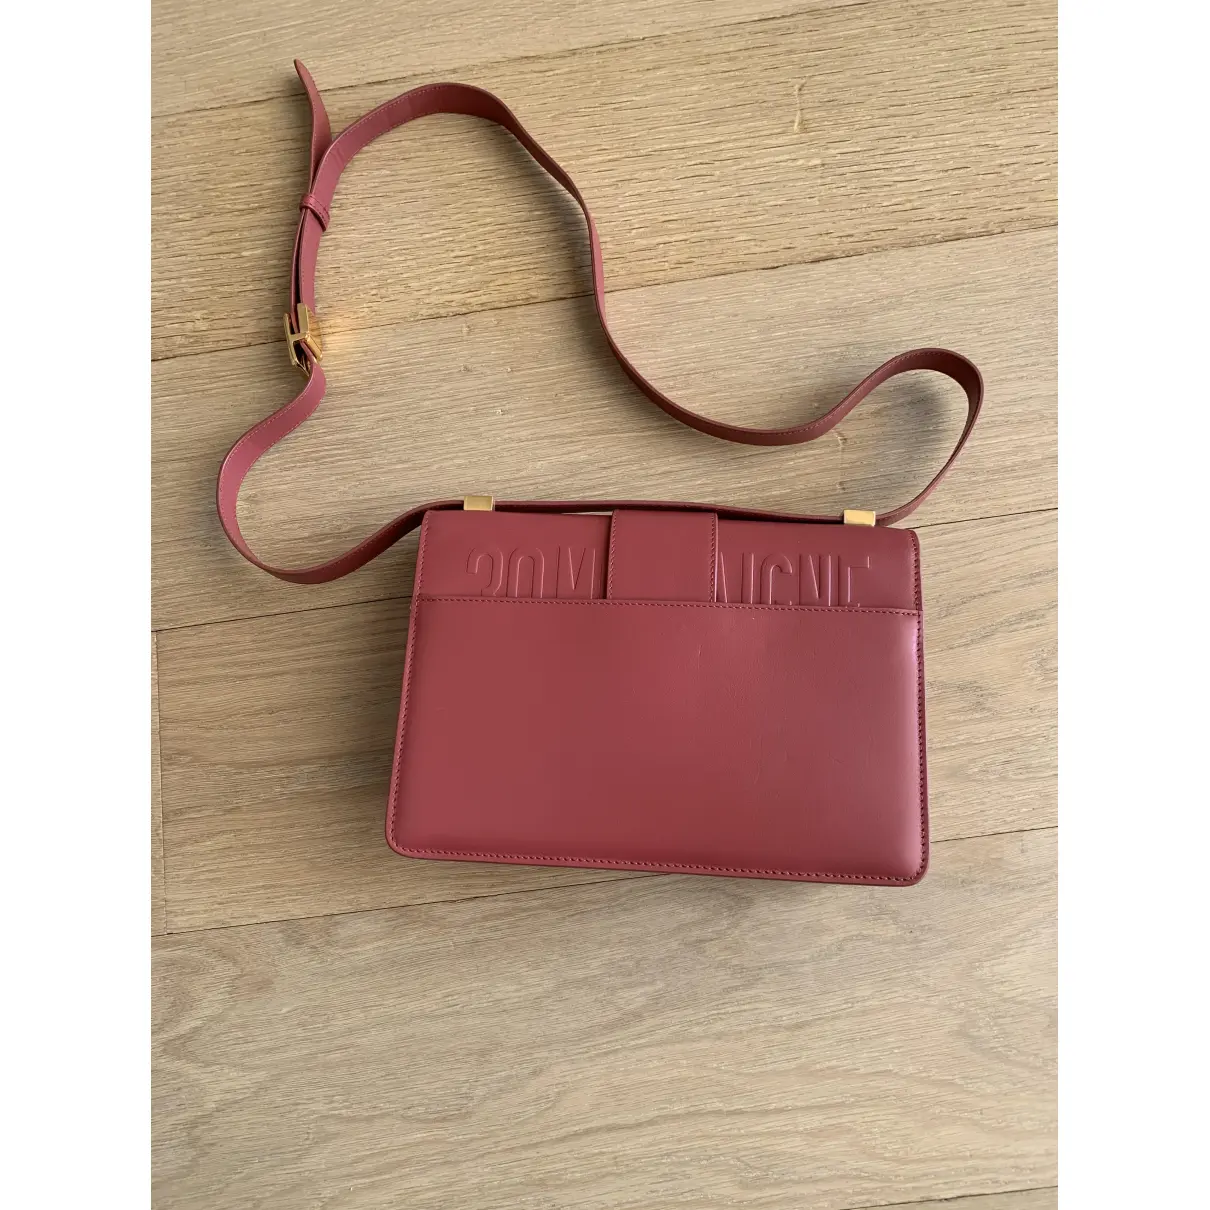 Buy Dior 30 Montaigne leather handbag online